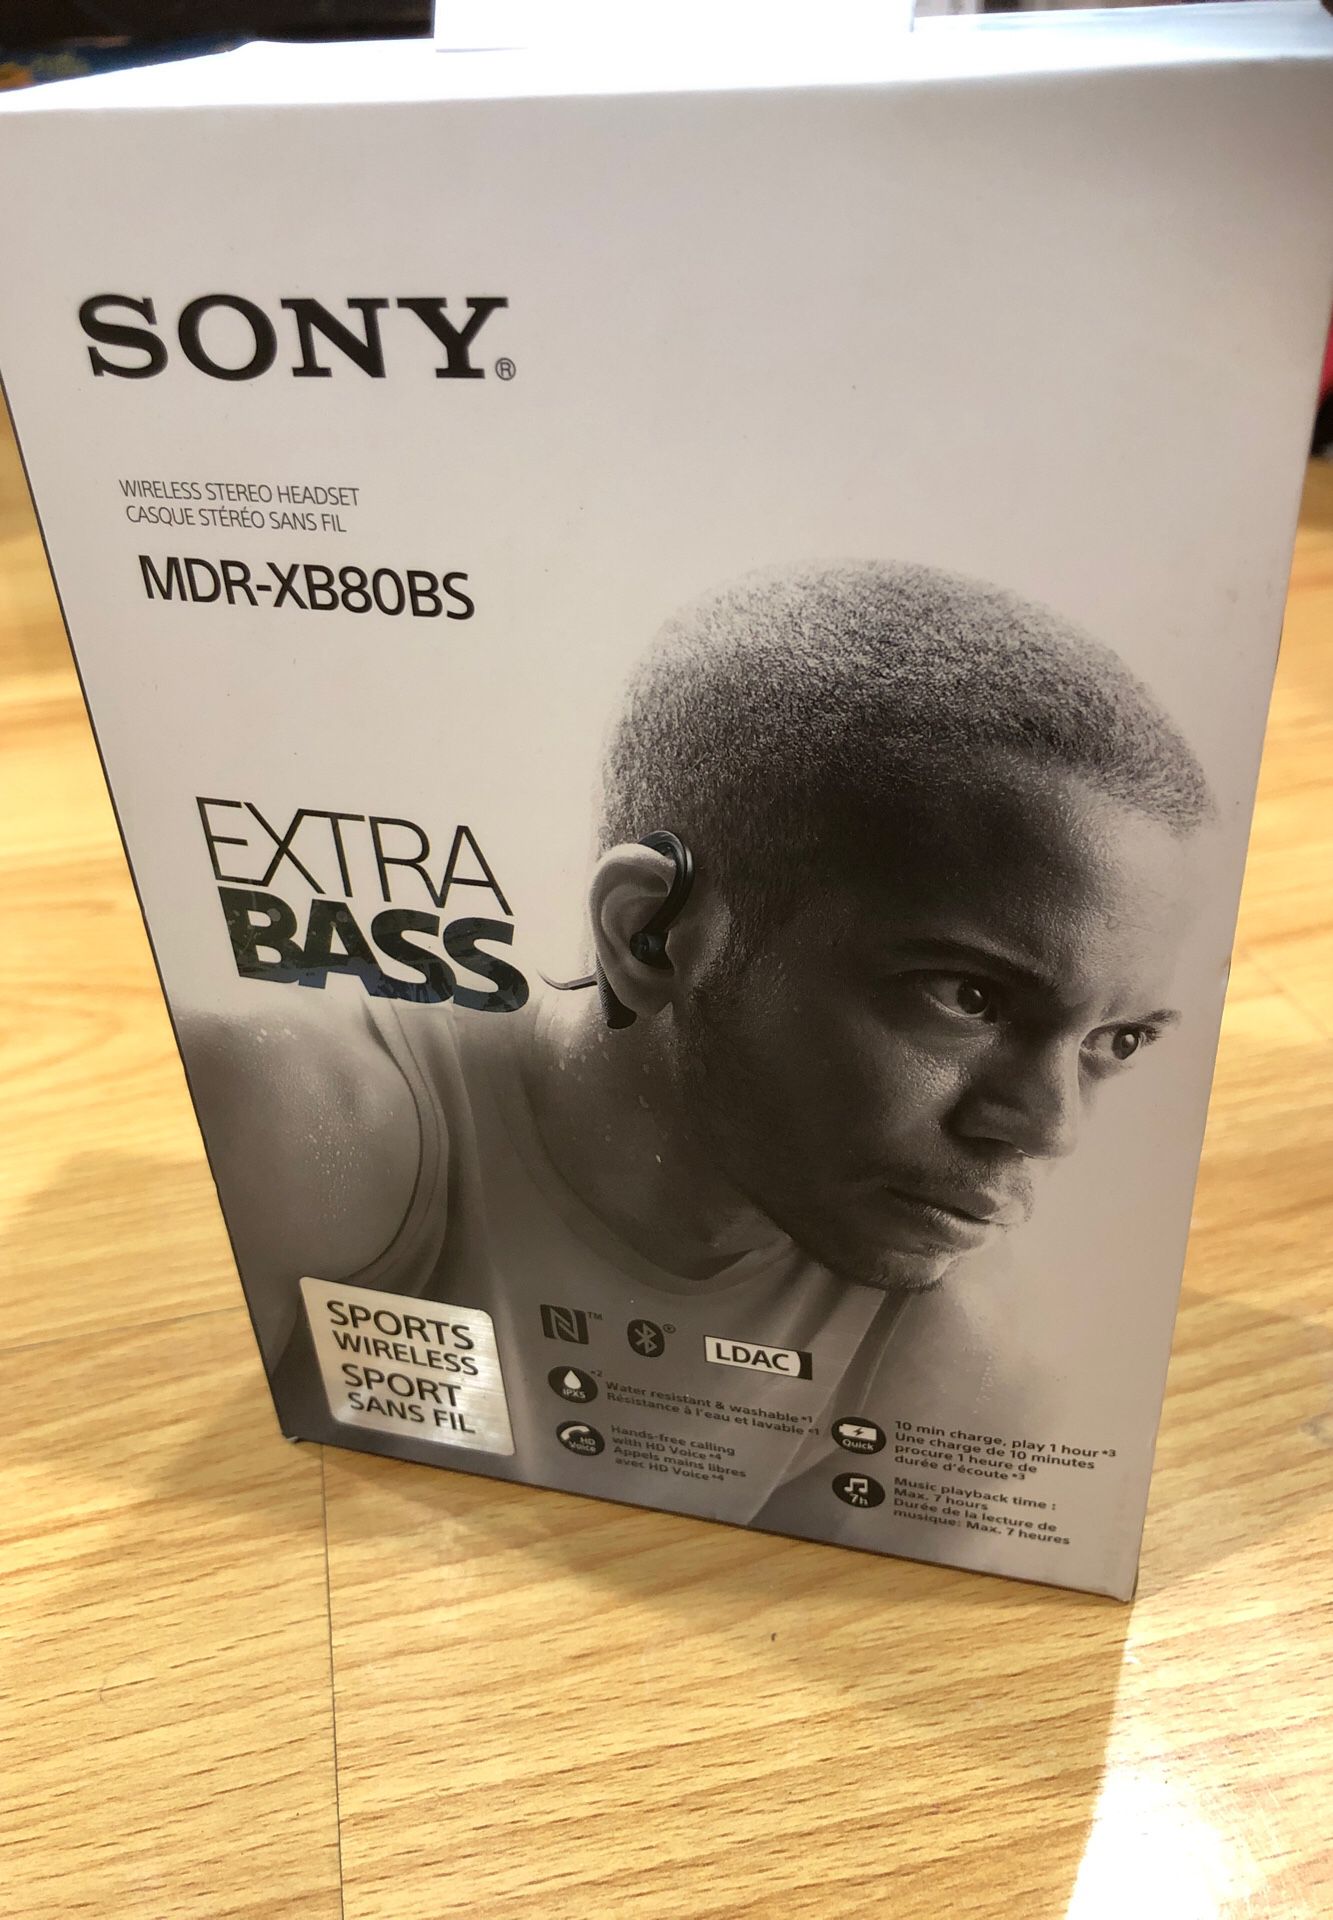 Sony mdr-xb80bs extra bass wireless headphone